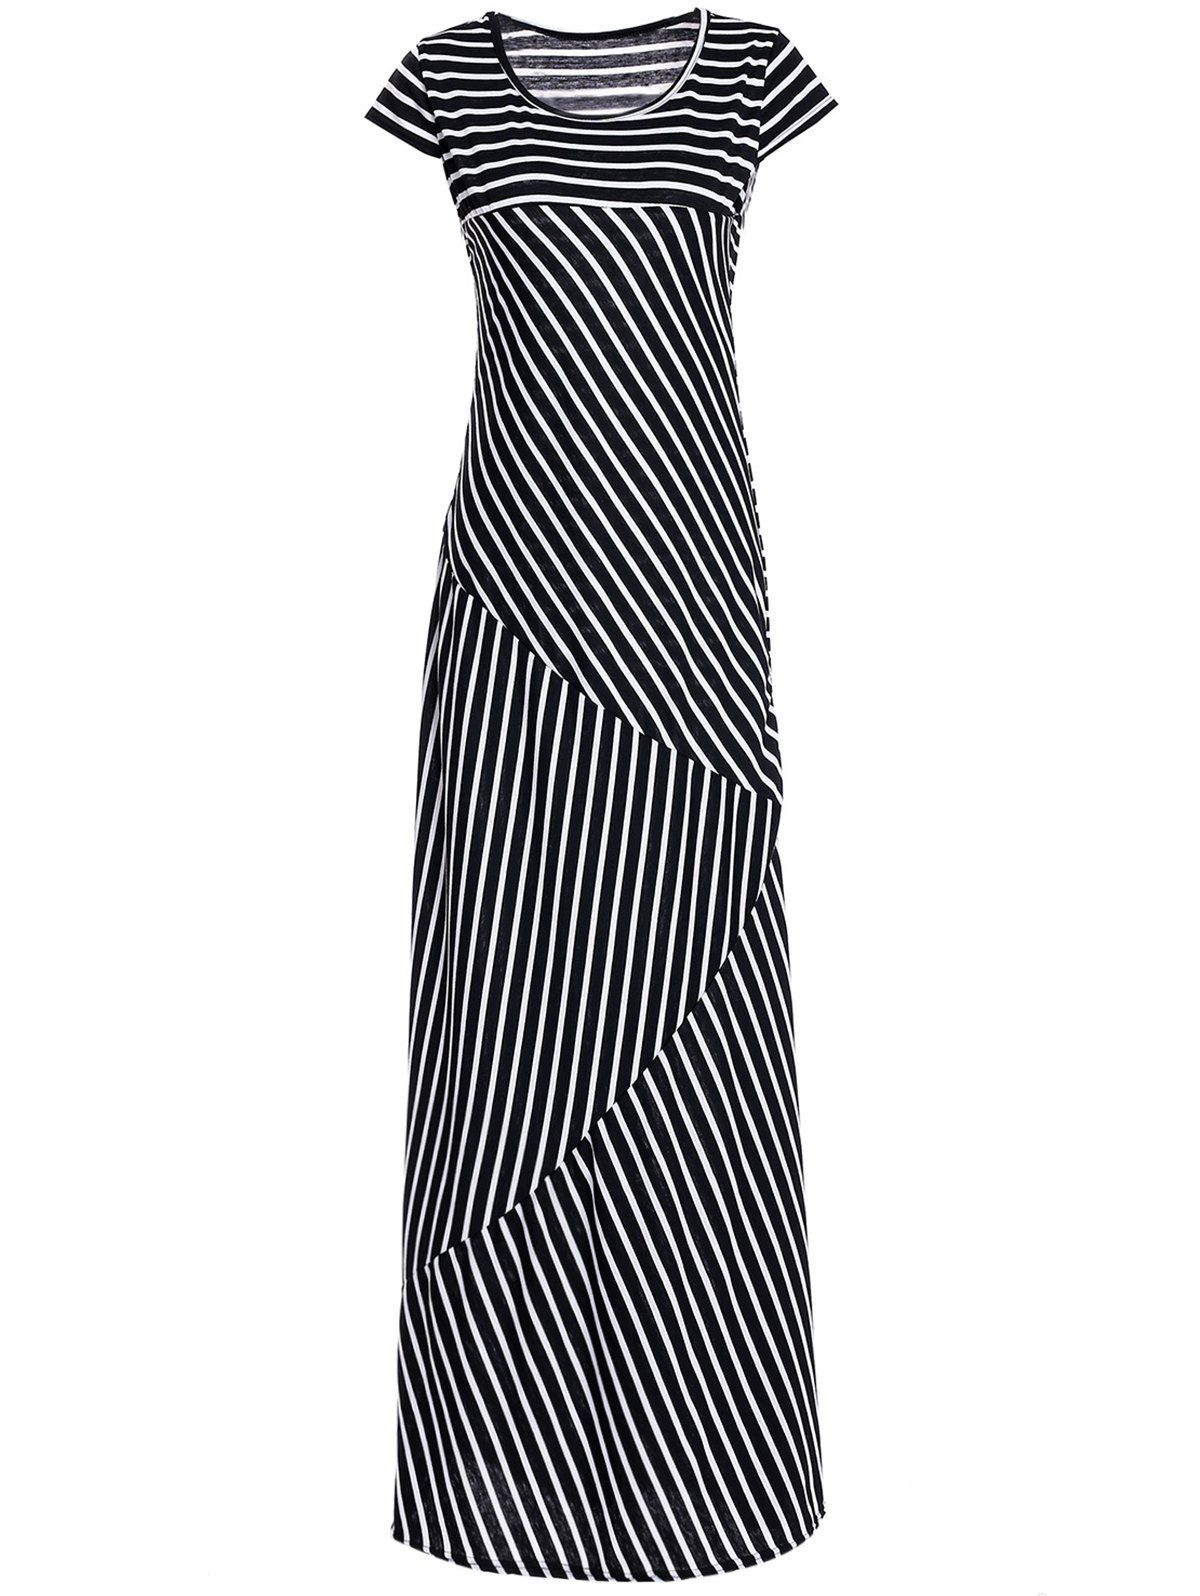 [17% OFF] 2021 Short Sleeve Scoop Collar Striped Maxi Dress In BLACK ...